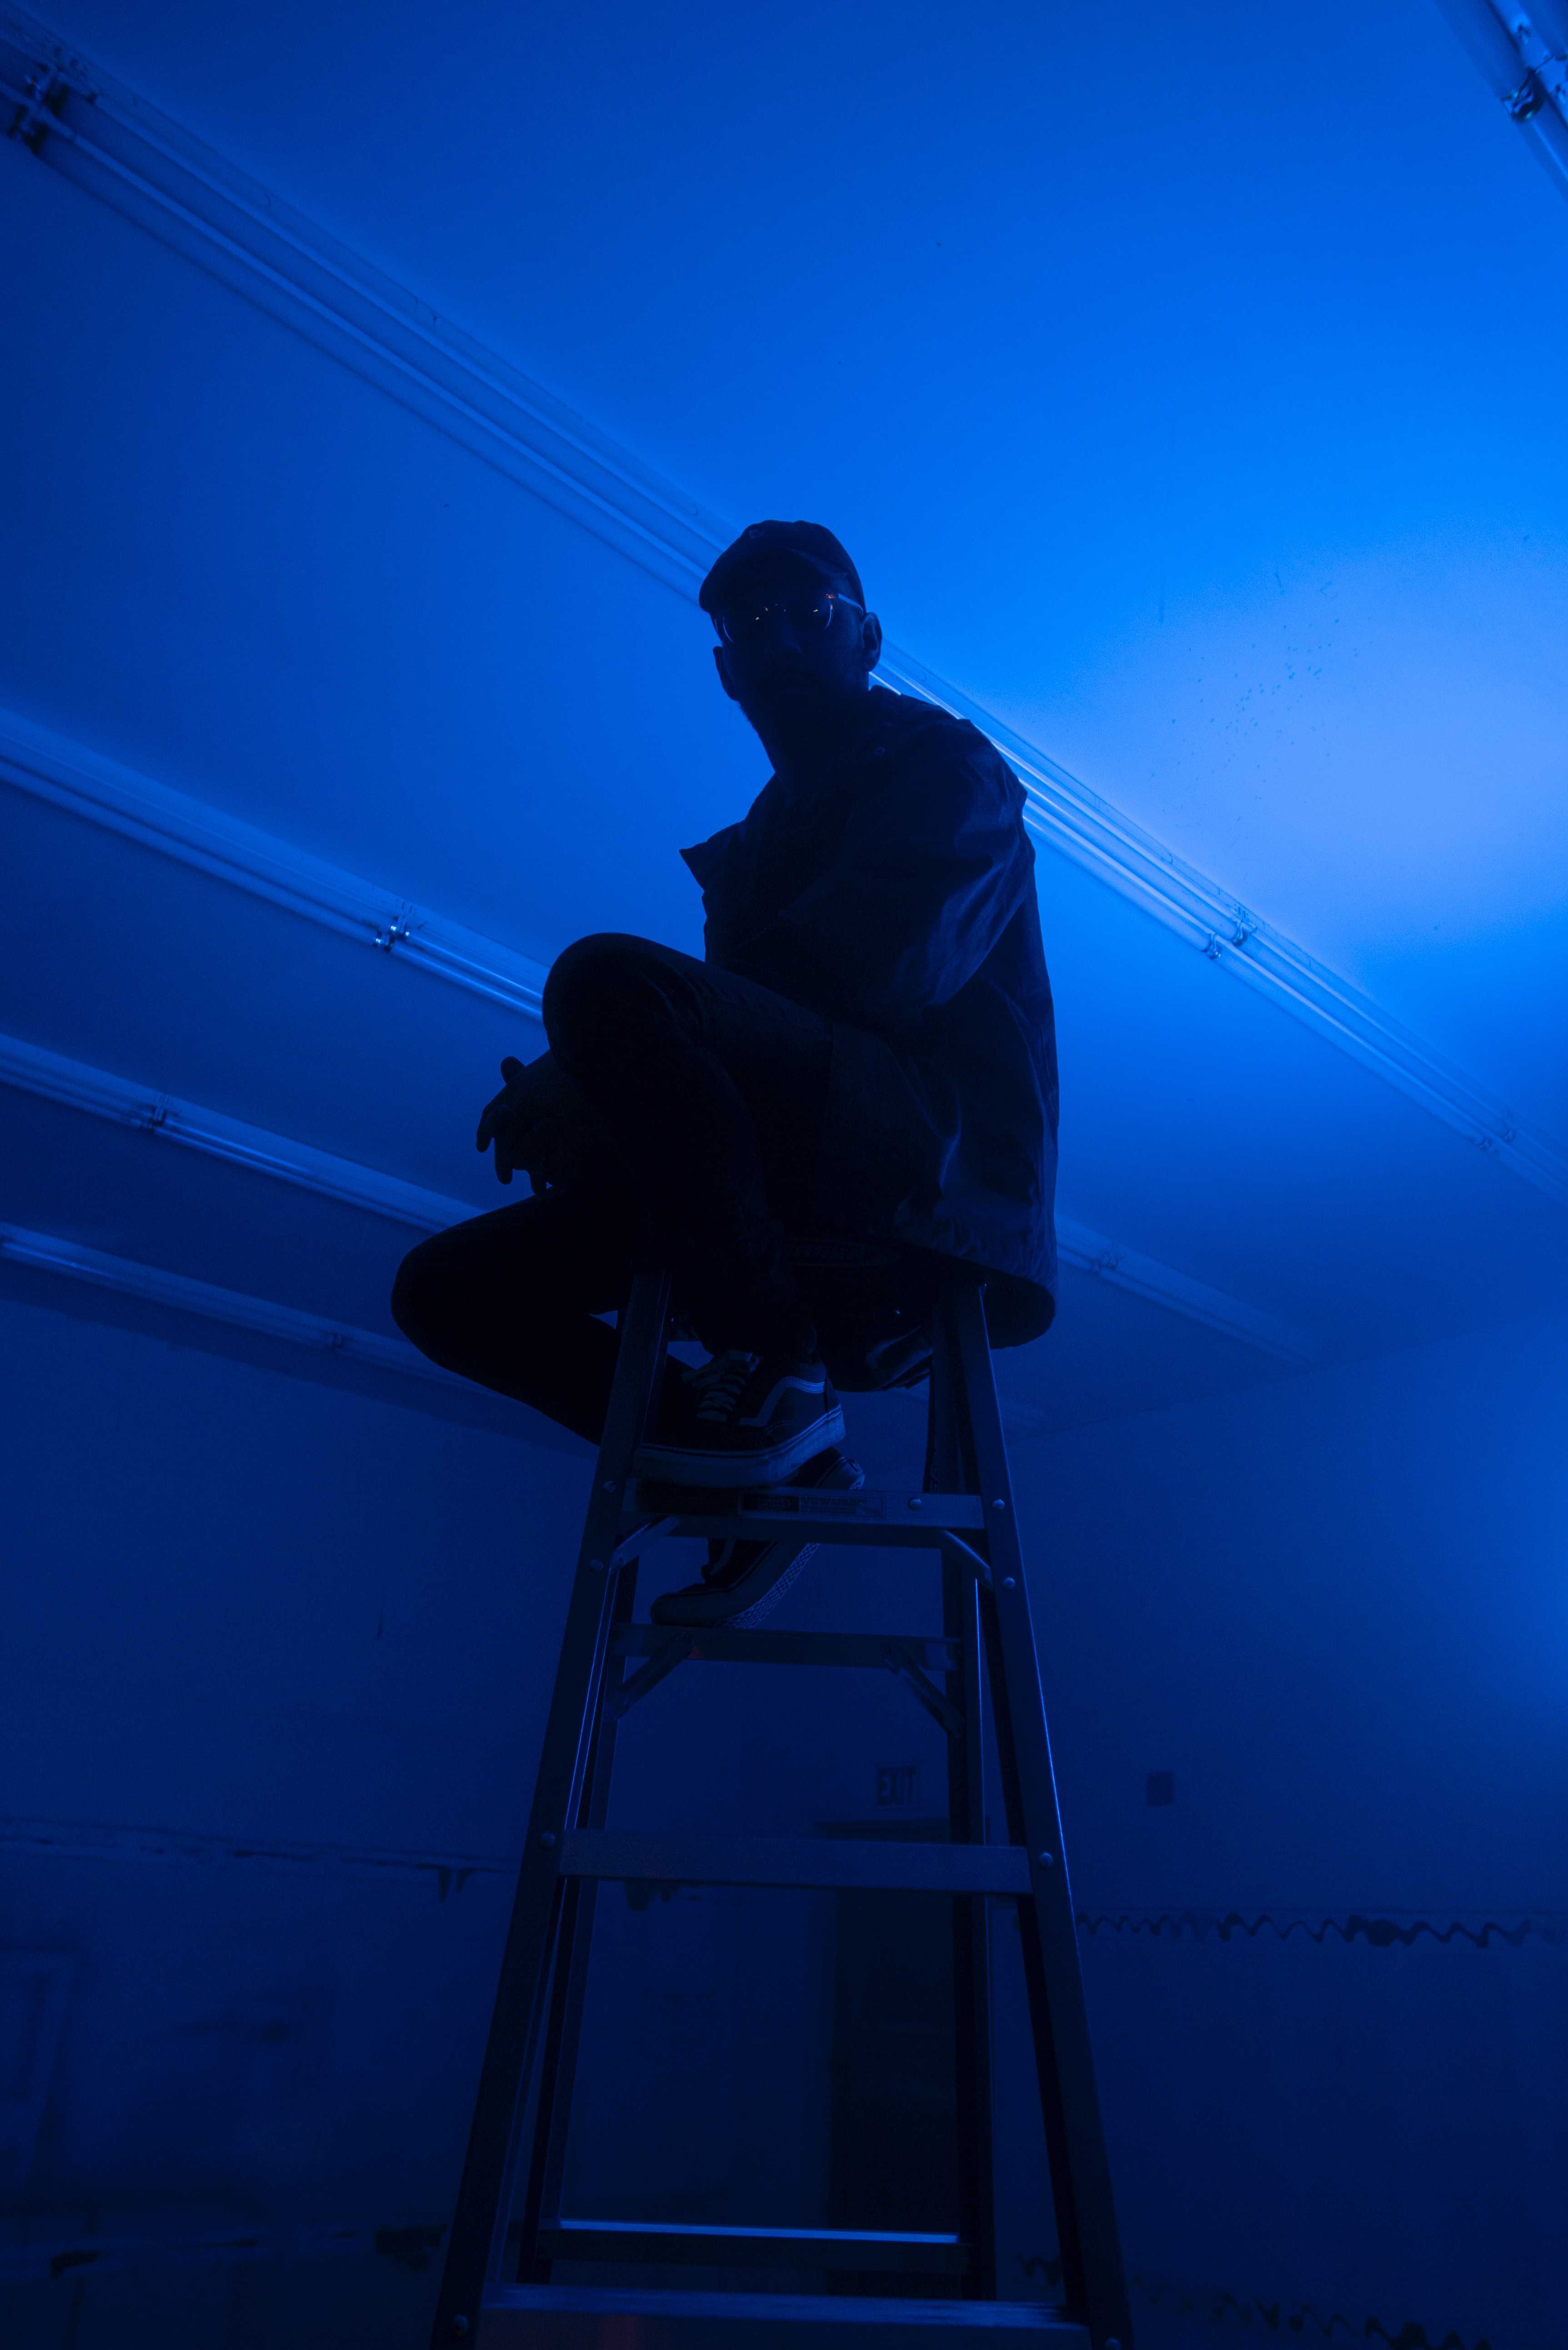 Wallpaper Full HD blue, dark, neon, stairs, ladder, human, person